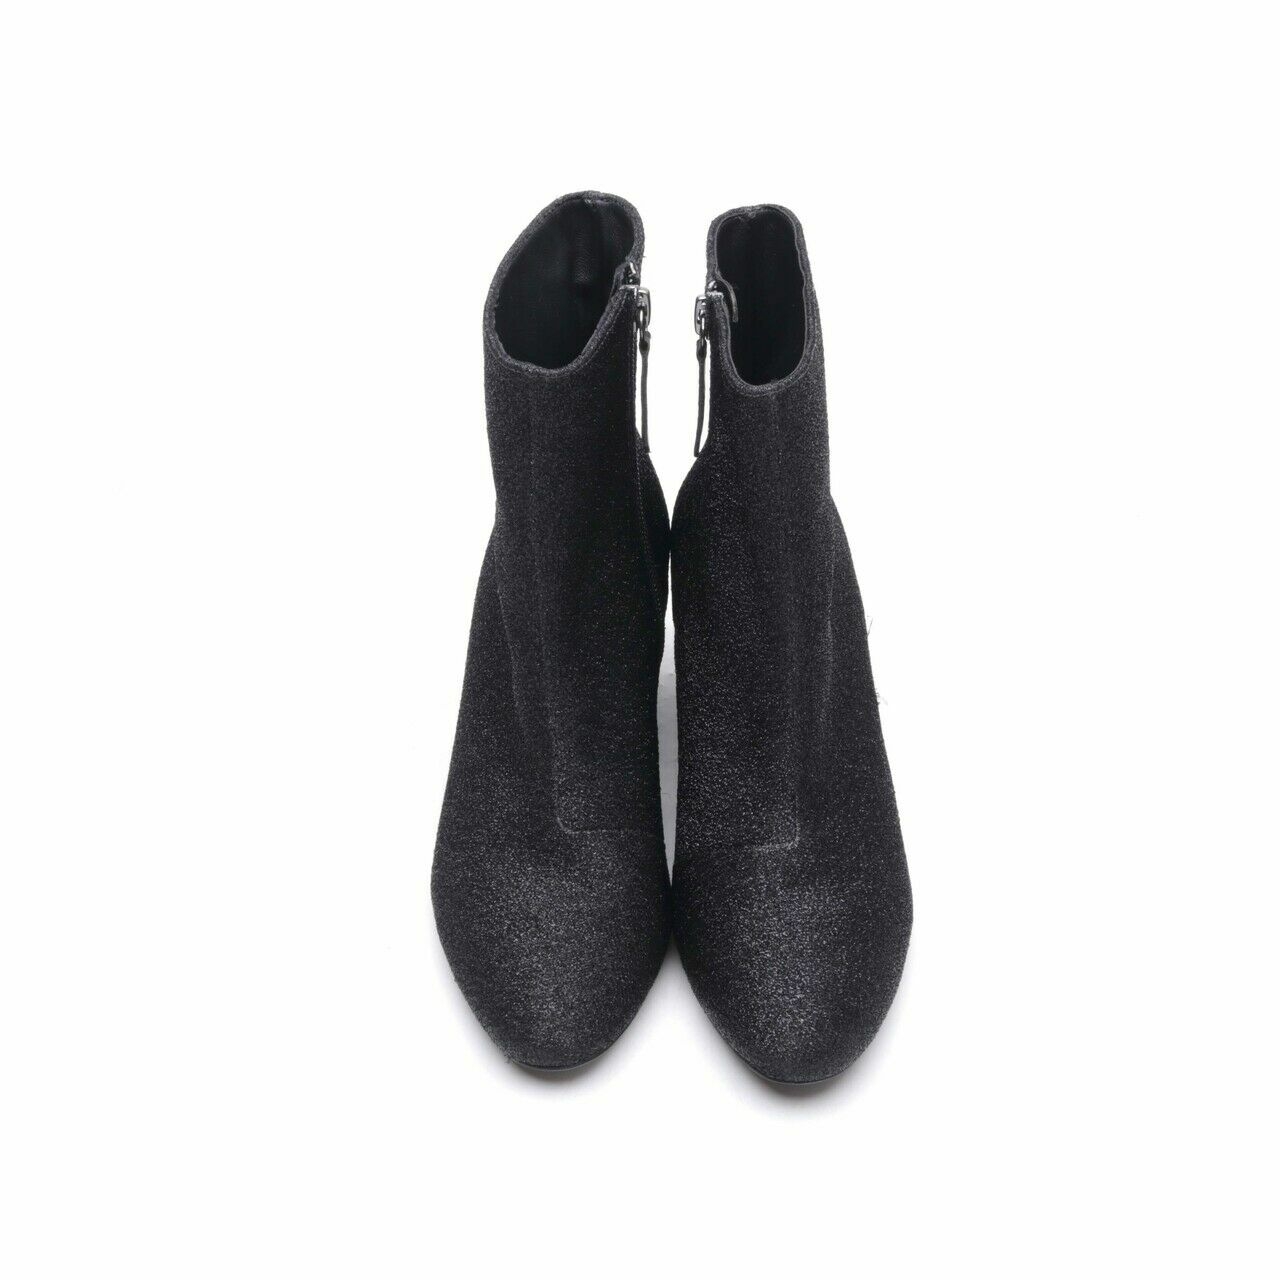 Schutz Black Ankle Boots Heels